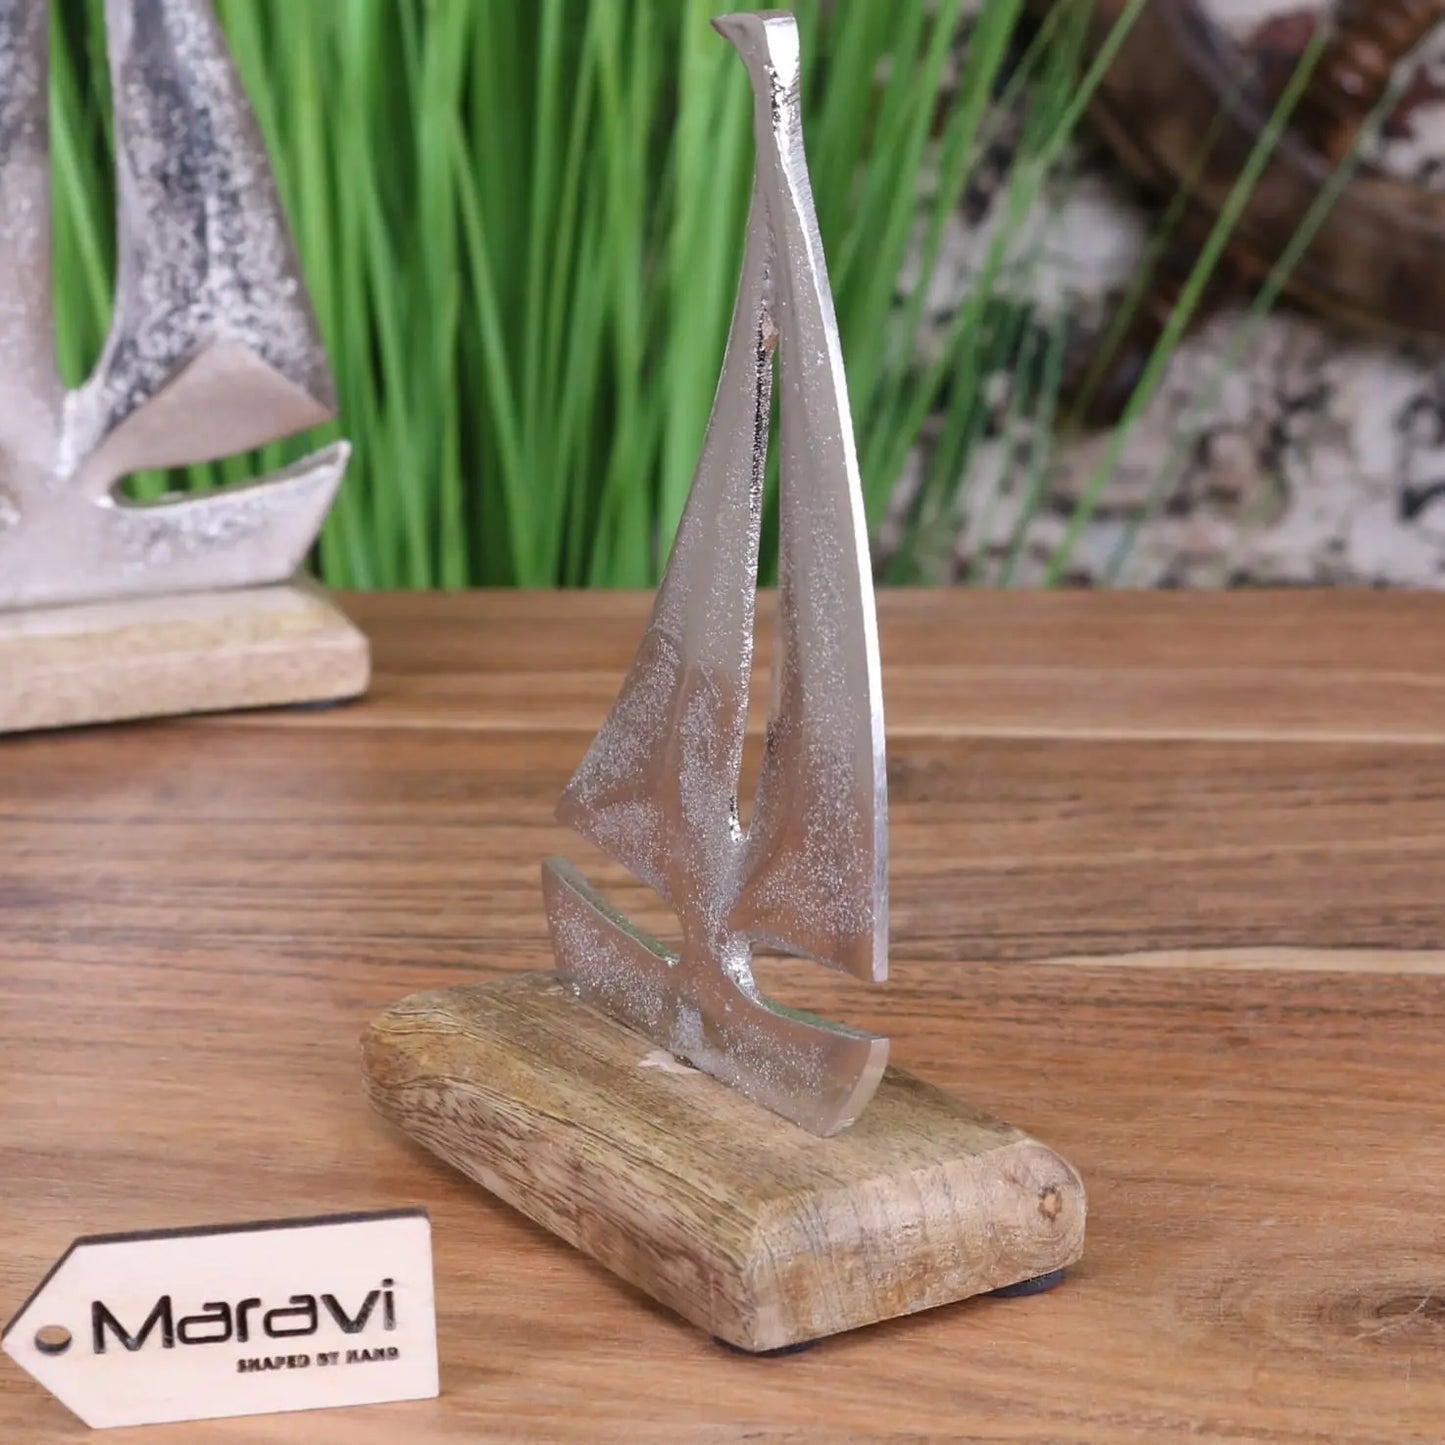 Mandvi Sailing Boat Ornament Model - Small Size Side View